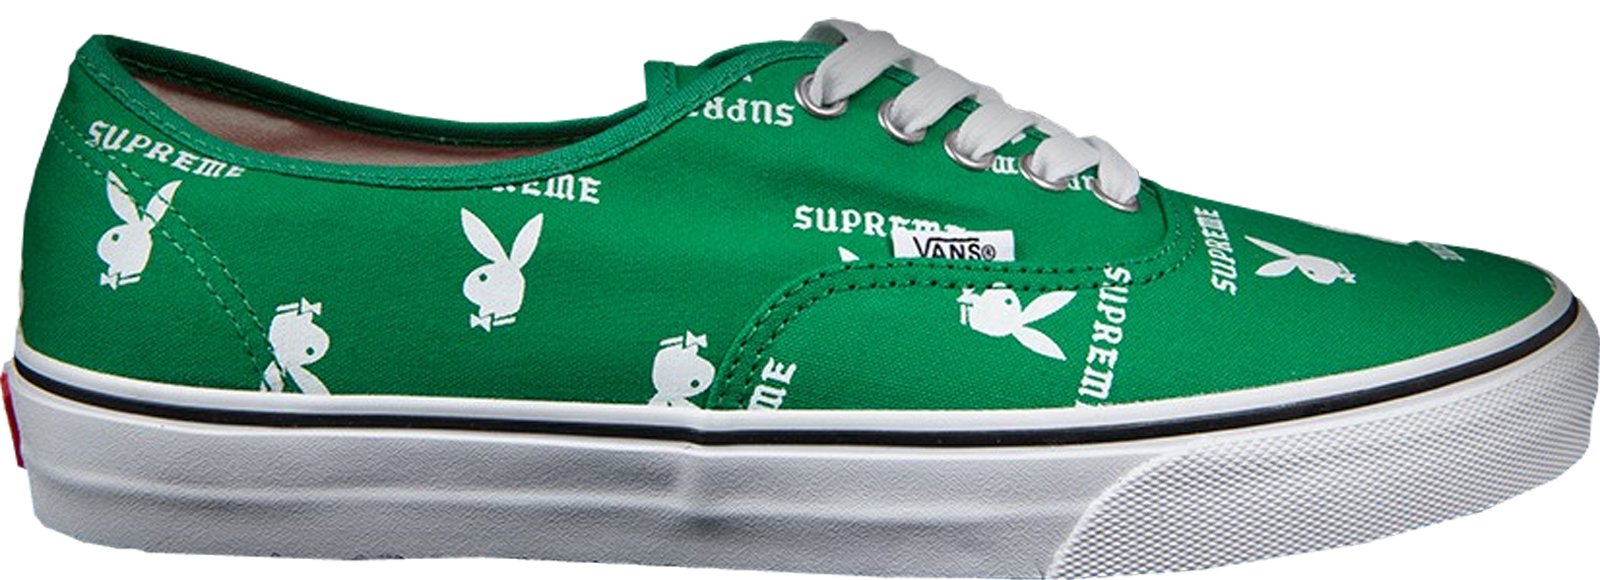 Vans Authentic Supreme x Playboy Green sneakers